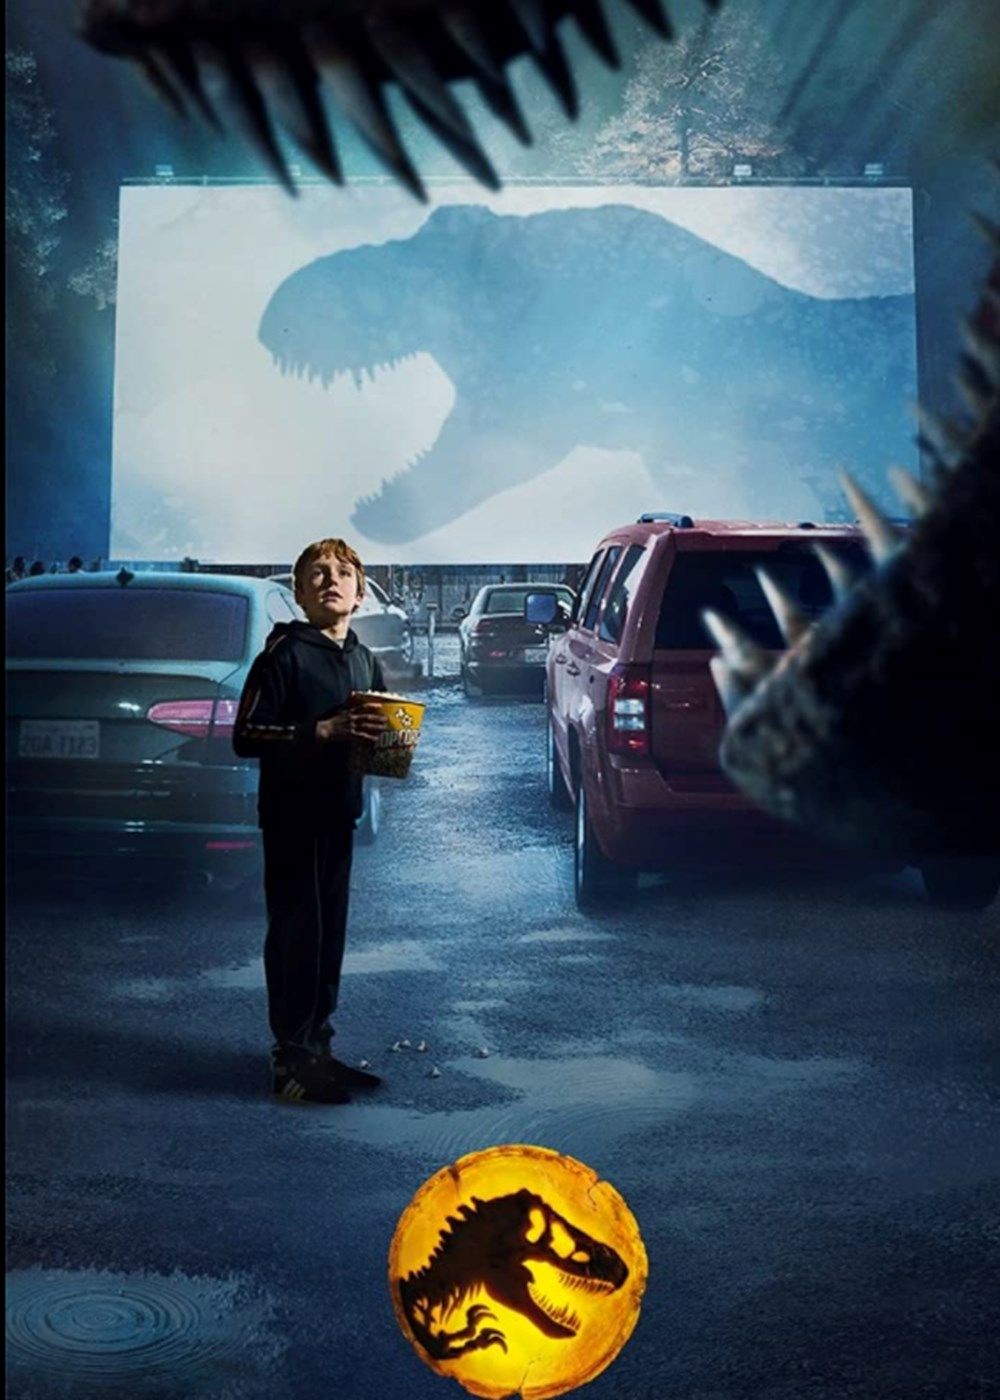 Jurassic Park filmine ilham veren dinozor iskeletine 12,4 milyon dolar - 3